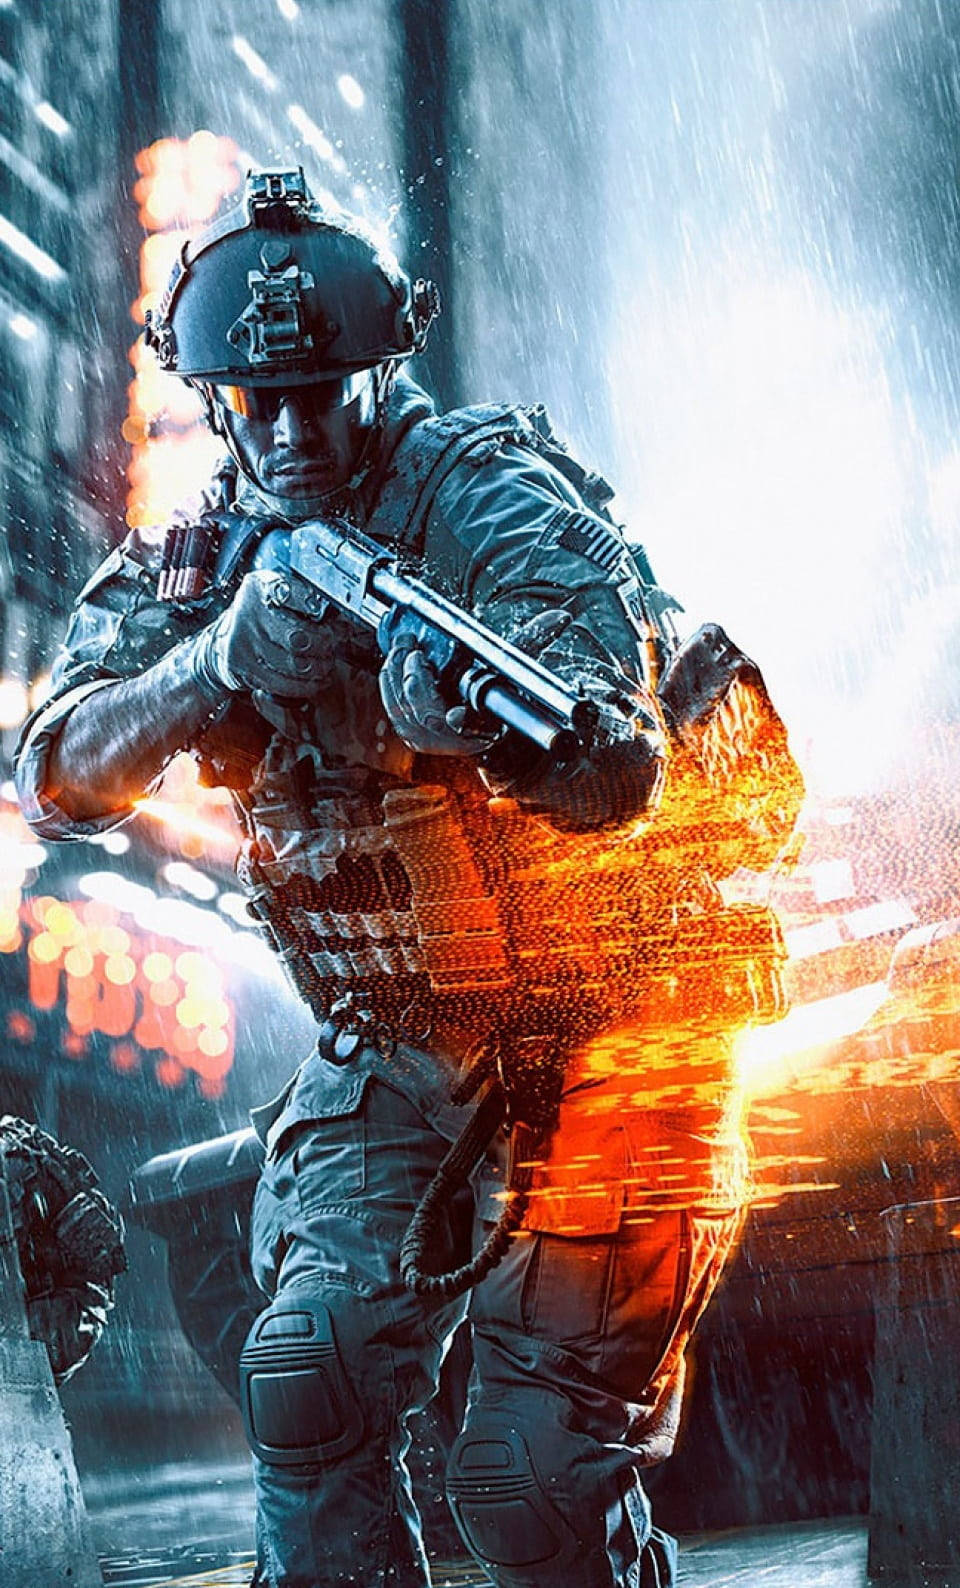 Battlefield 4 Bf4 Coldat rain hd wallpaper